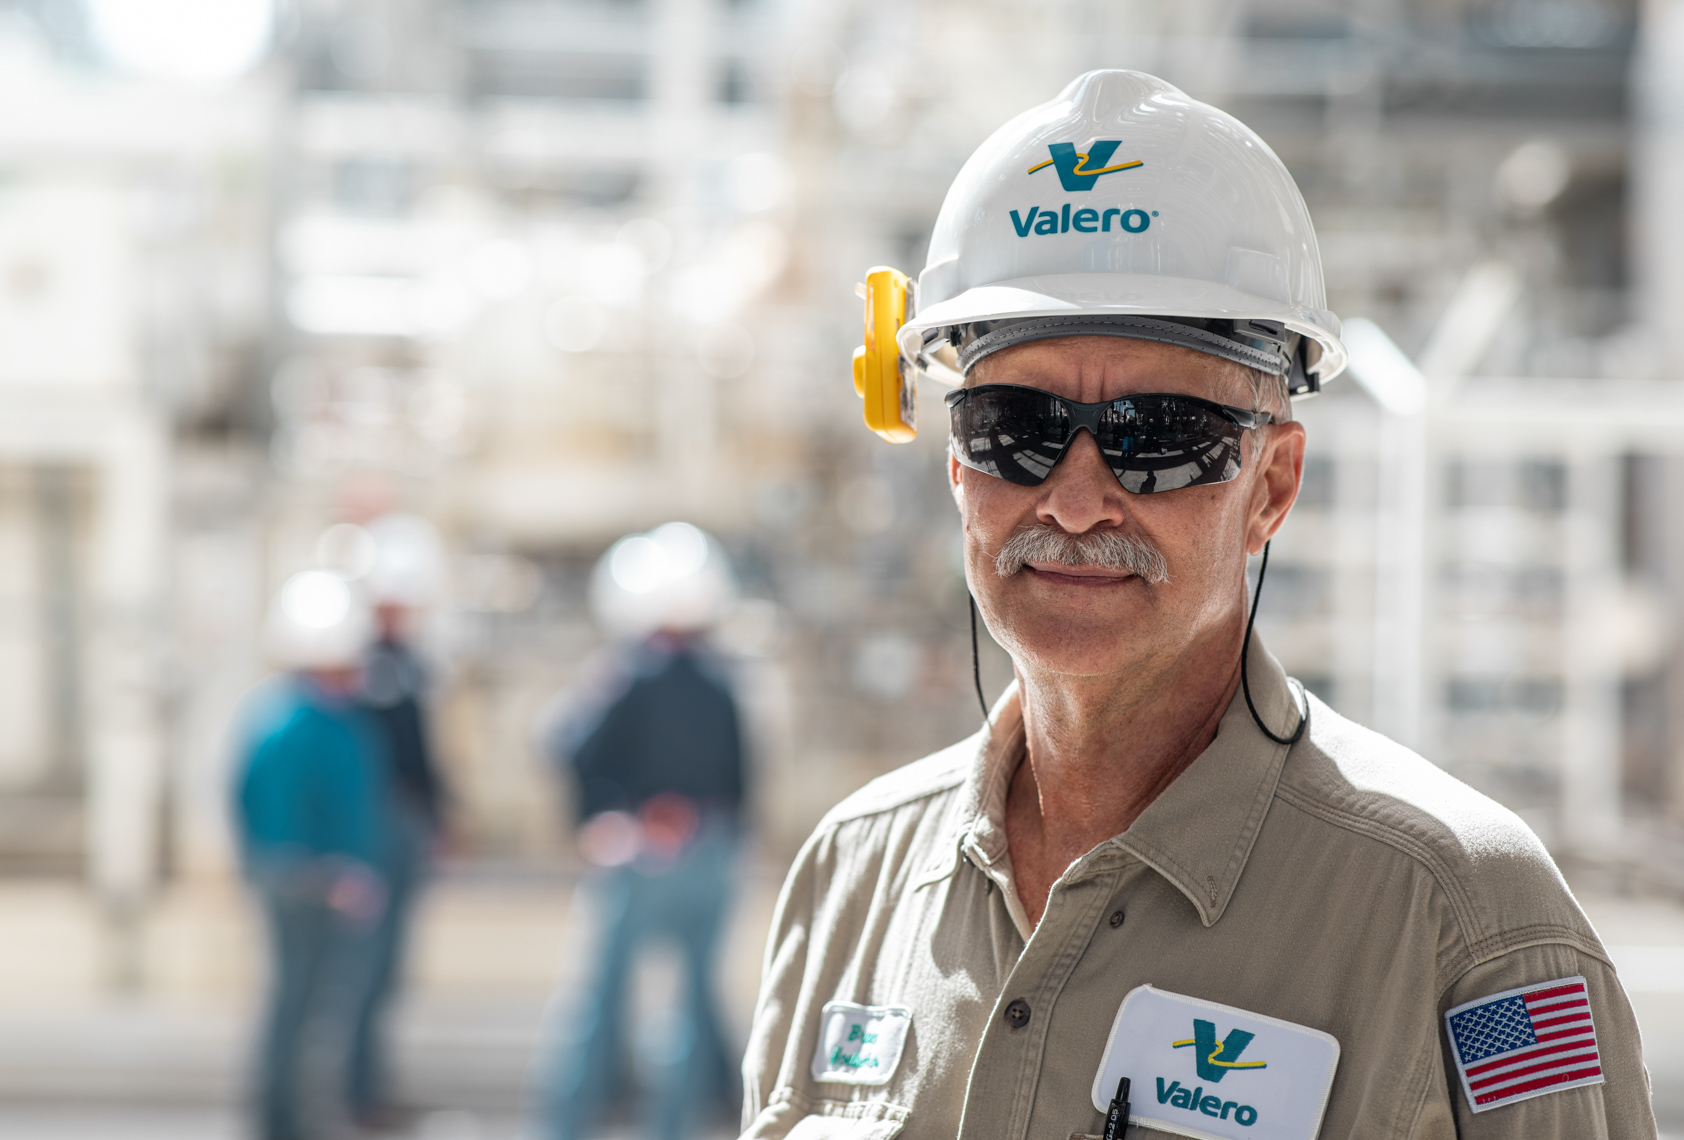 valero-oil-gas-refinery-worker-texas-jason-risner-photography